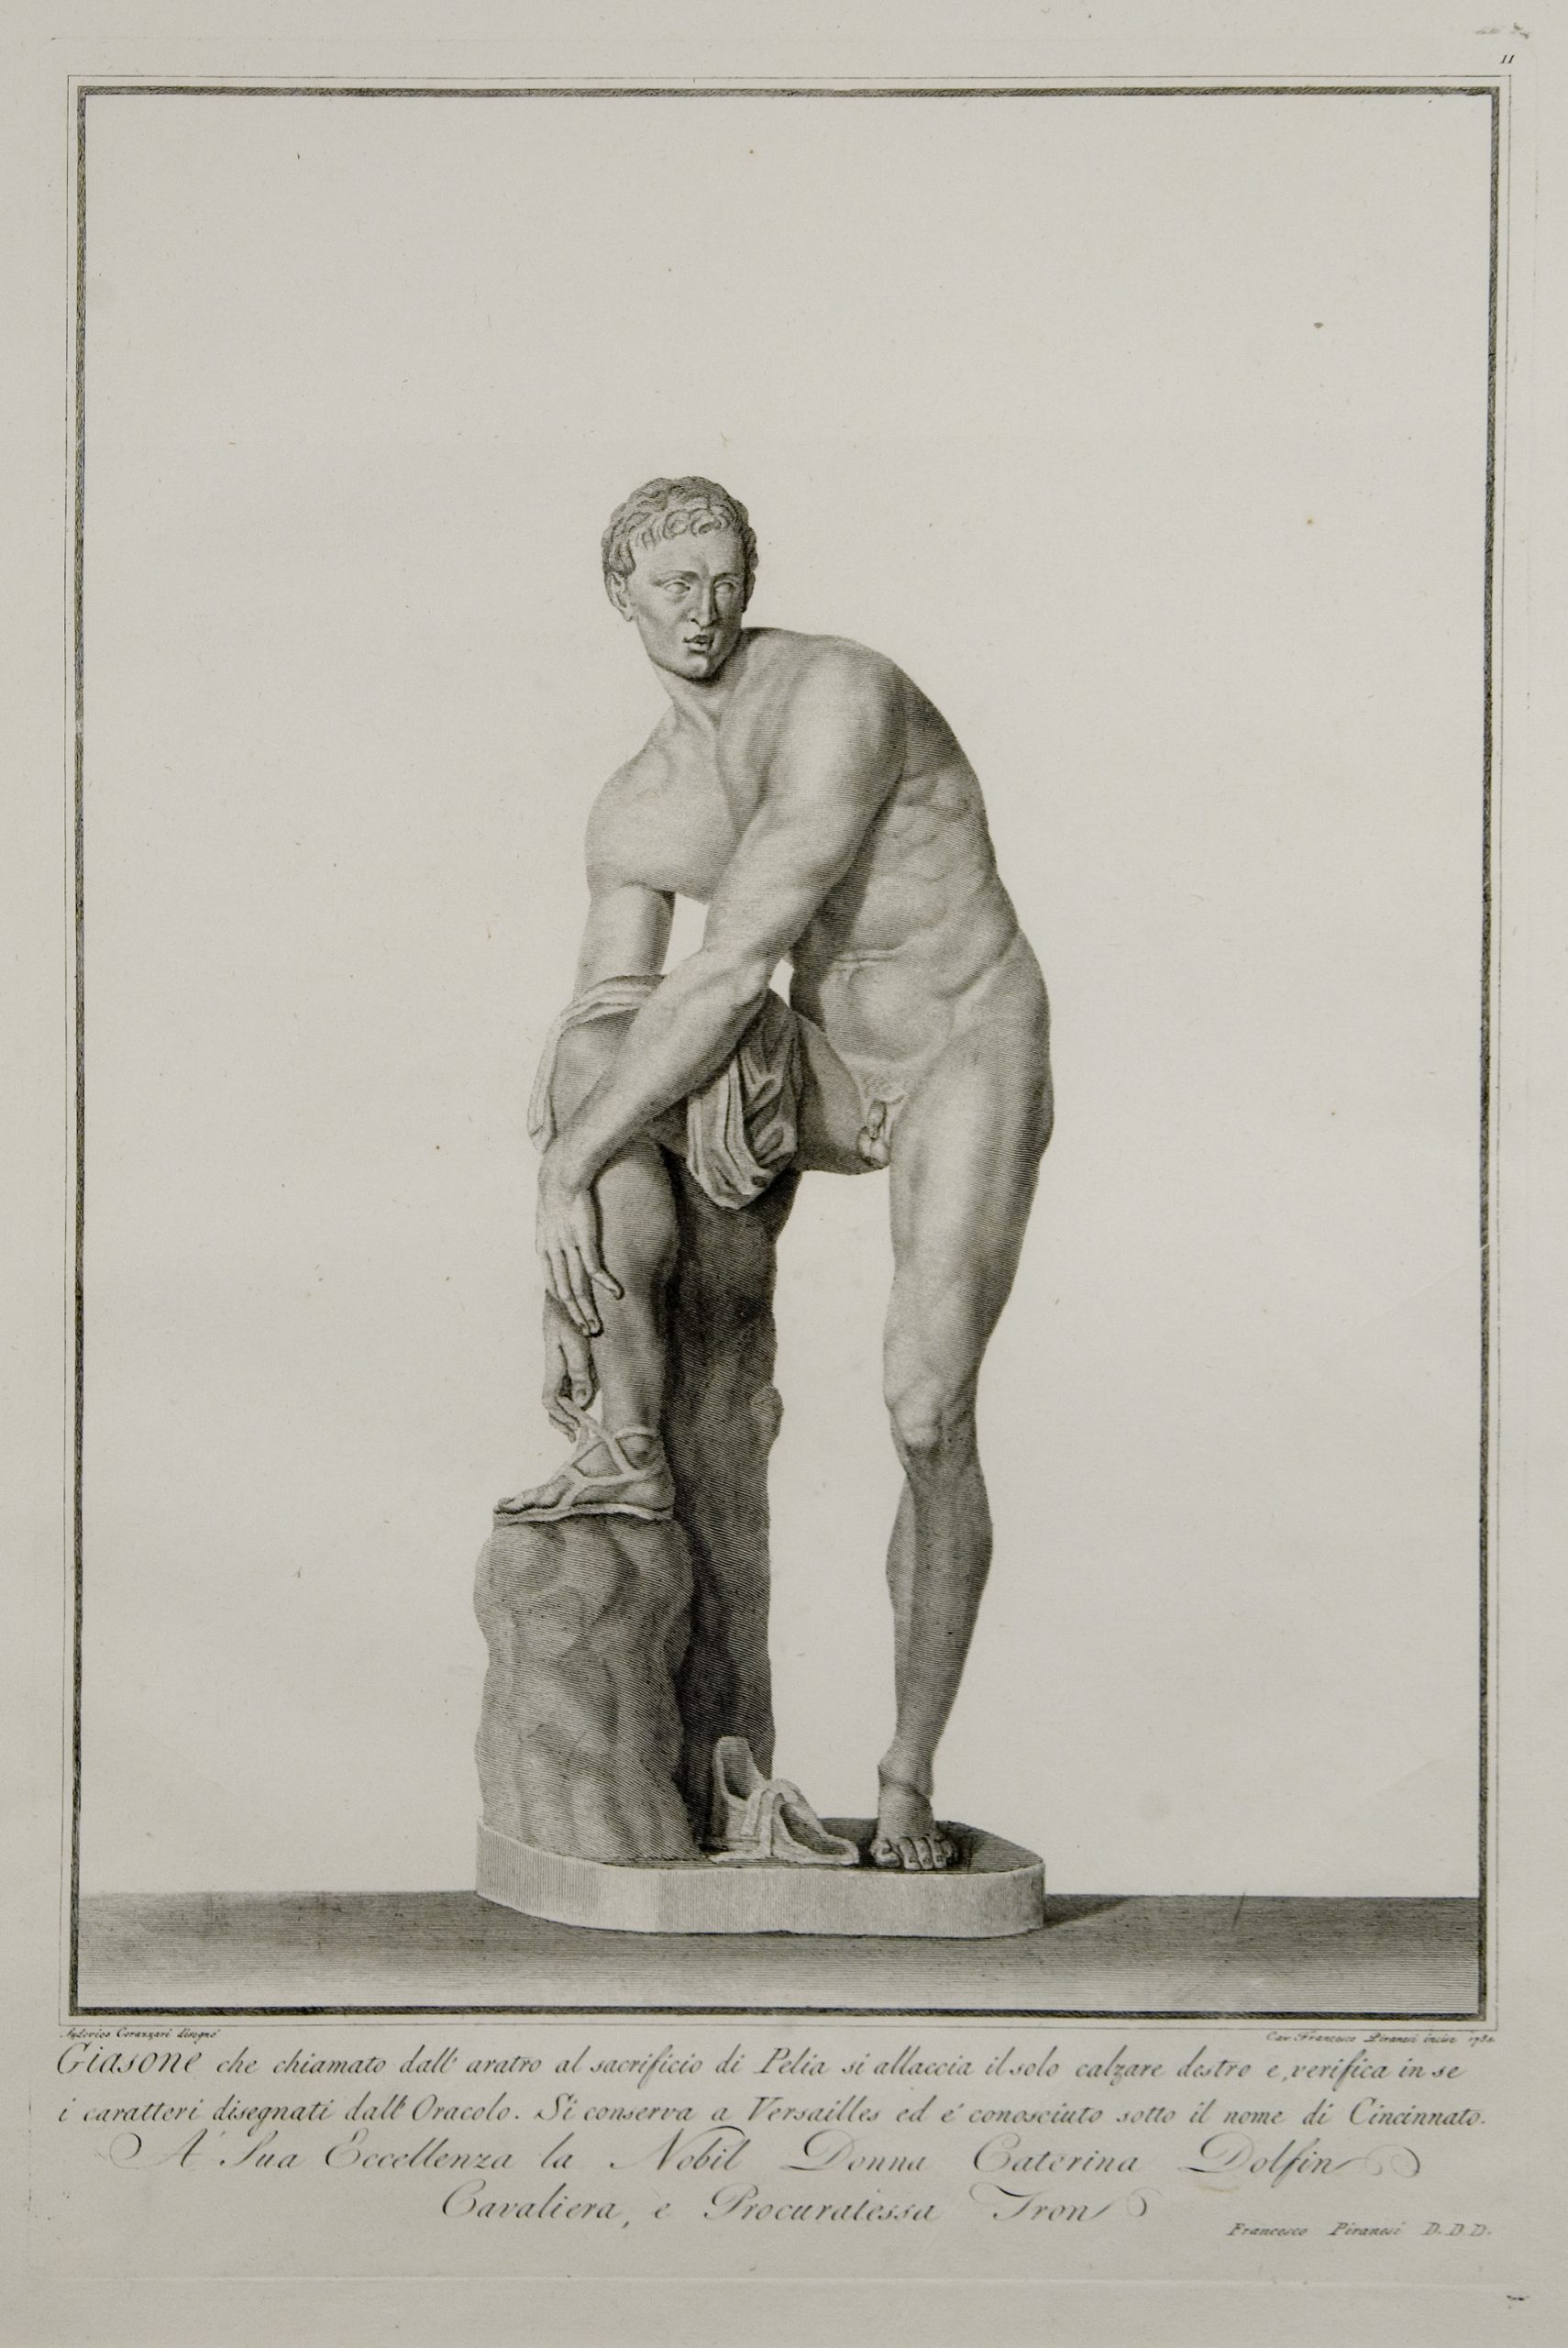 Engraving of a statue of Cincinnatus